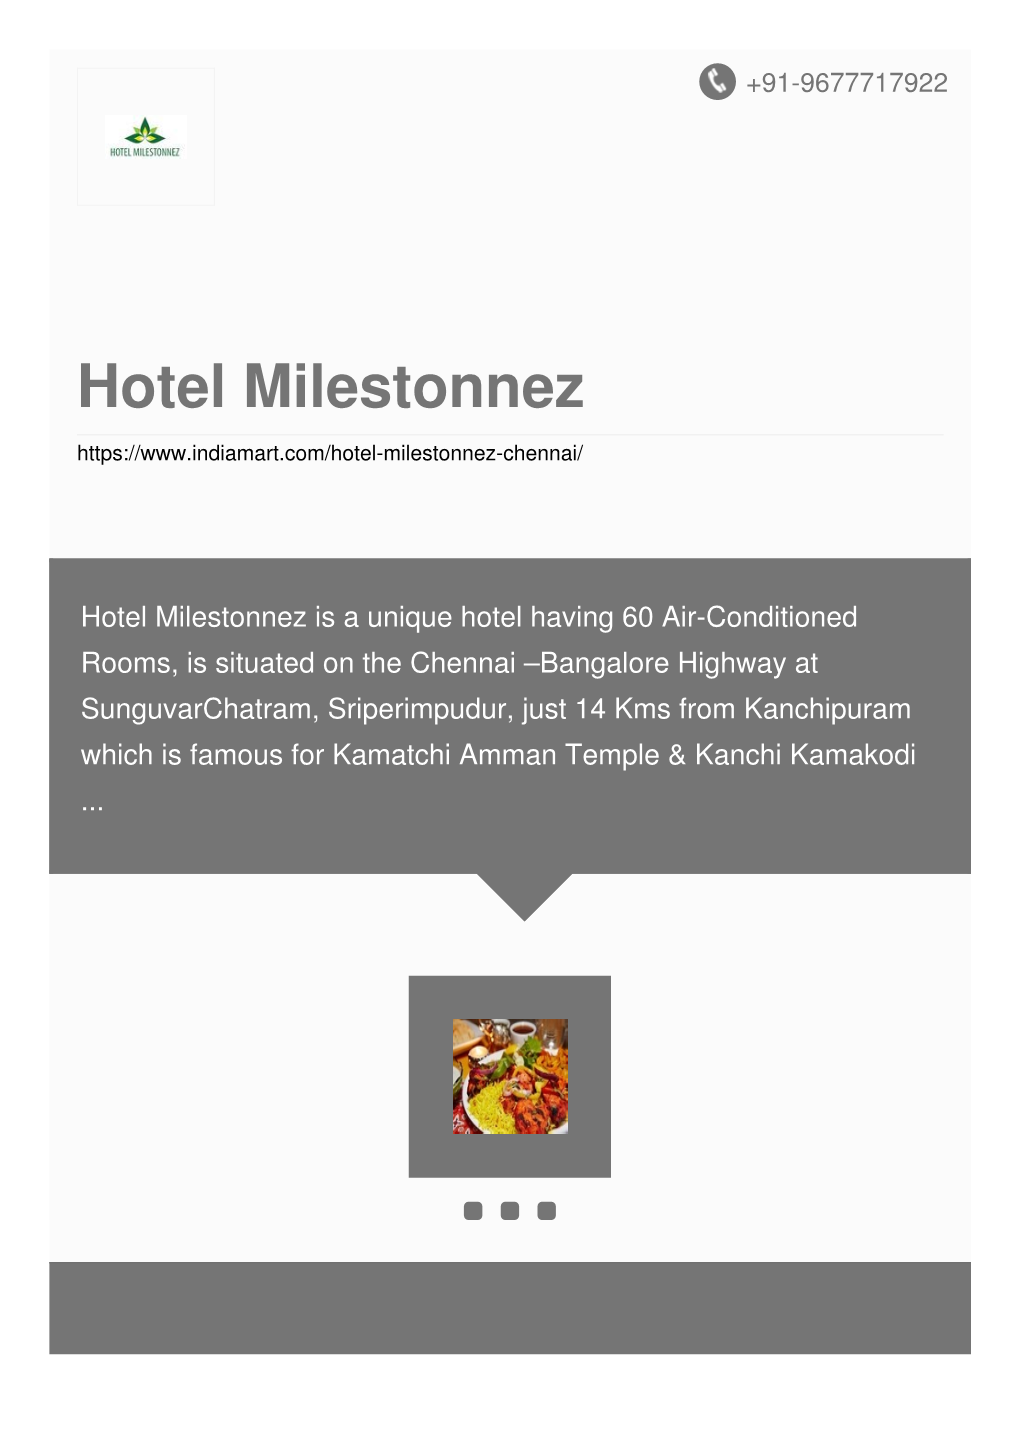 Hotel Milestonnez